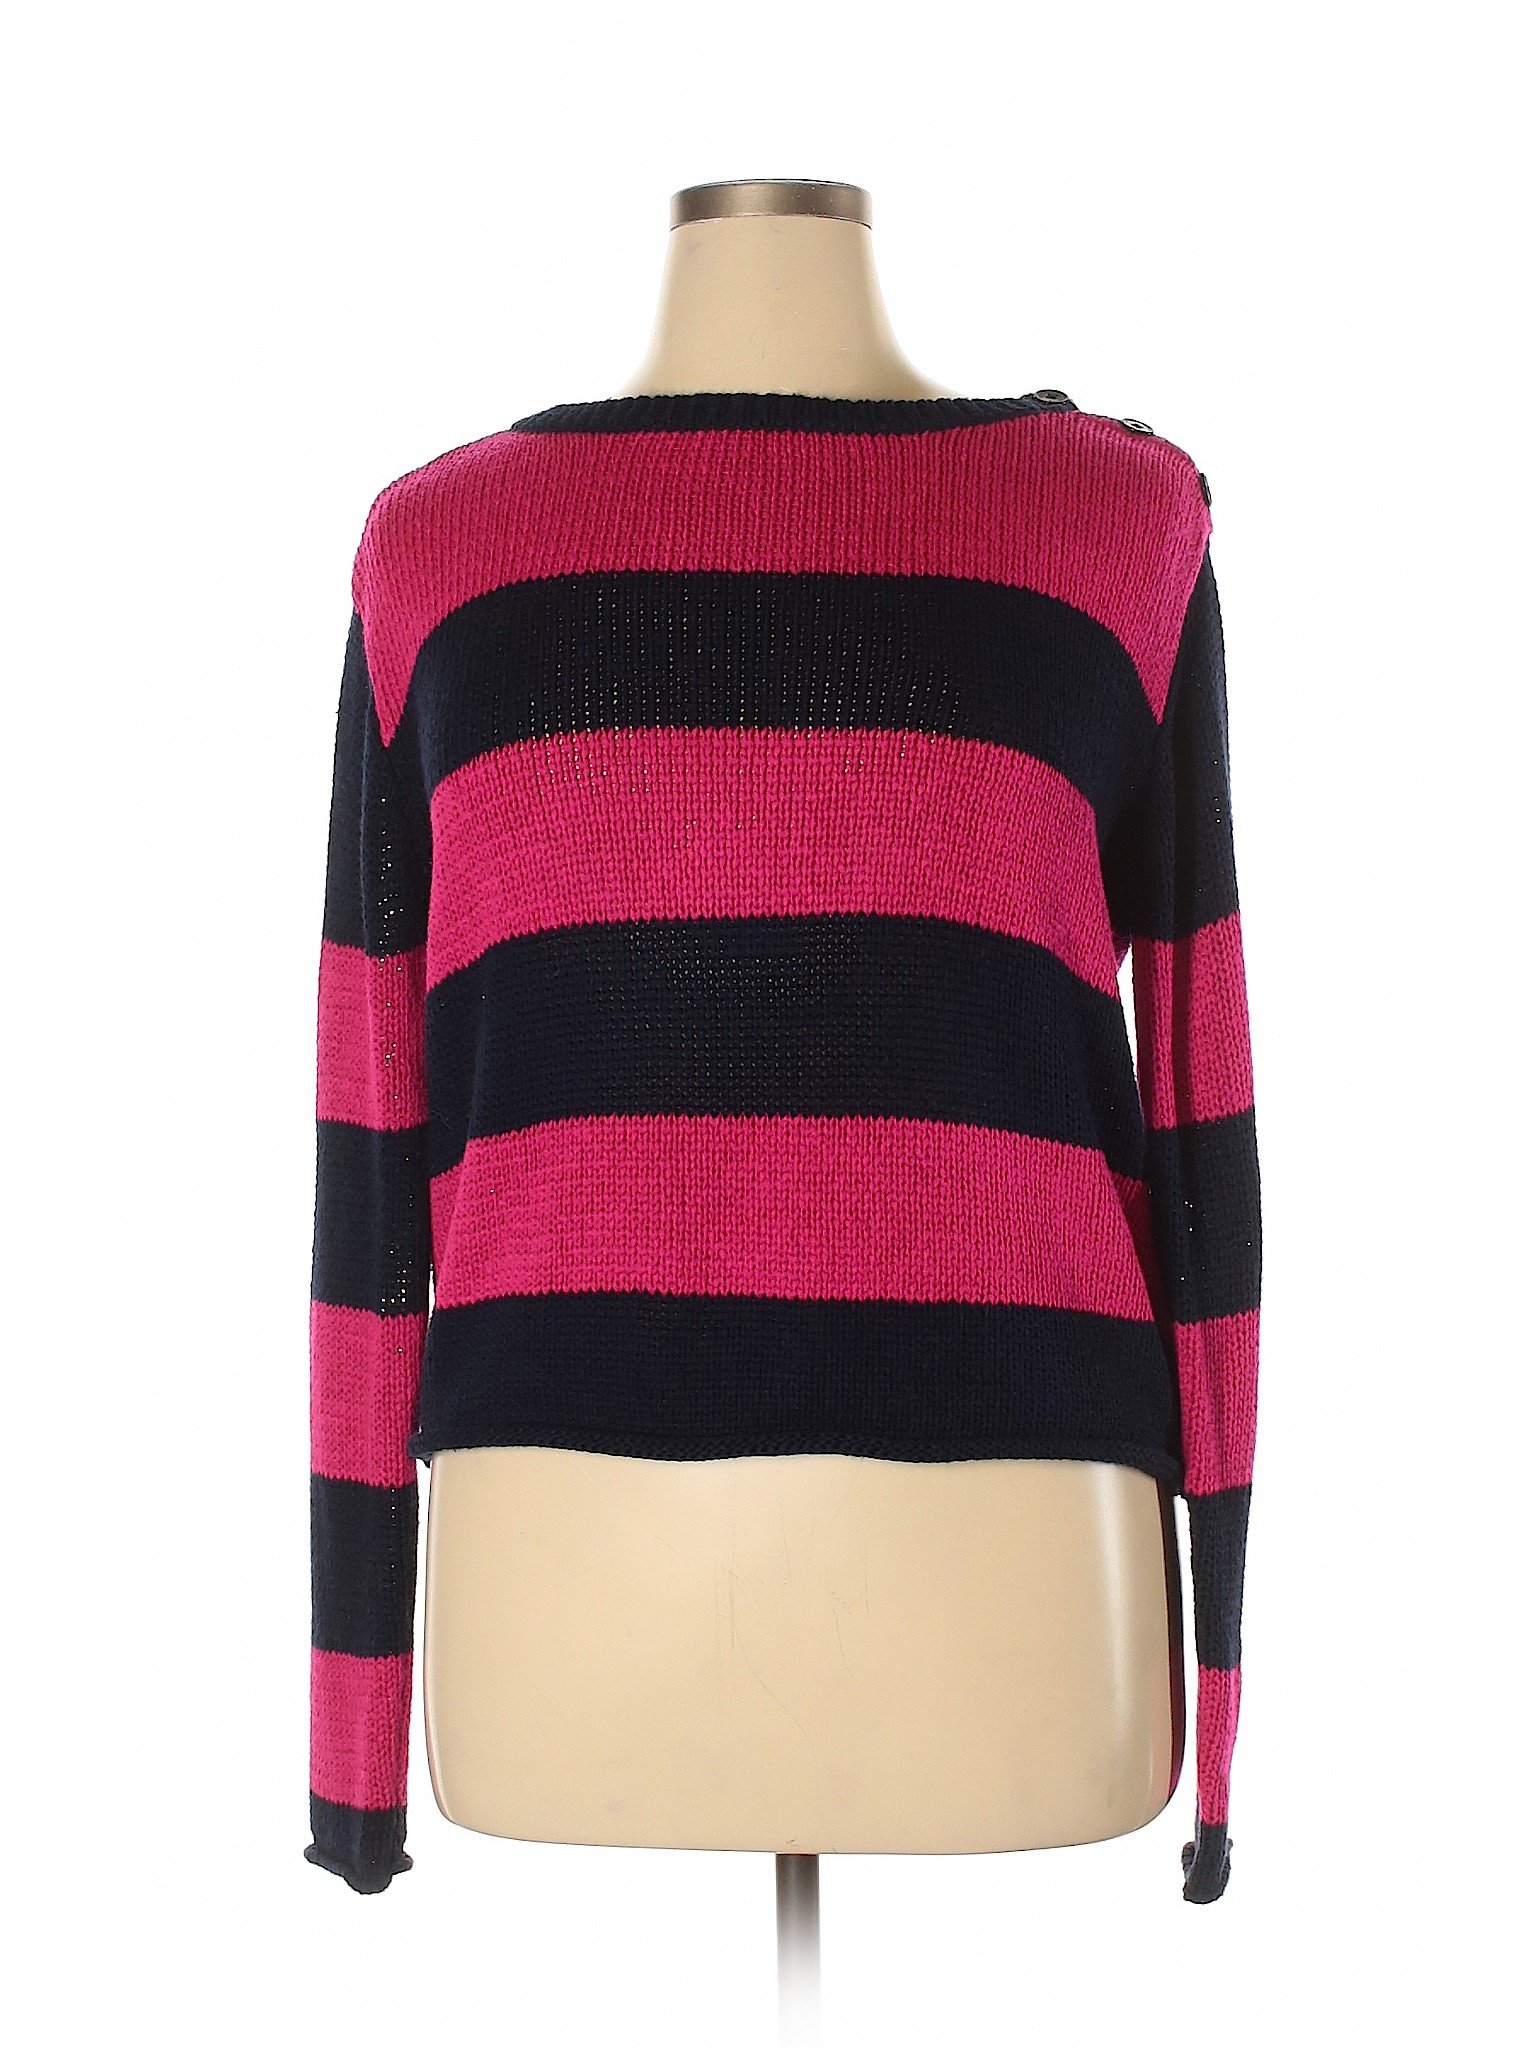 Lauren by Ralph Lauren Women Pink Pullover Sweater XL | eBay